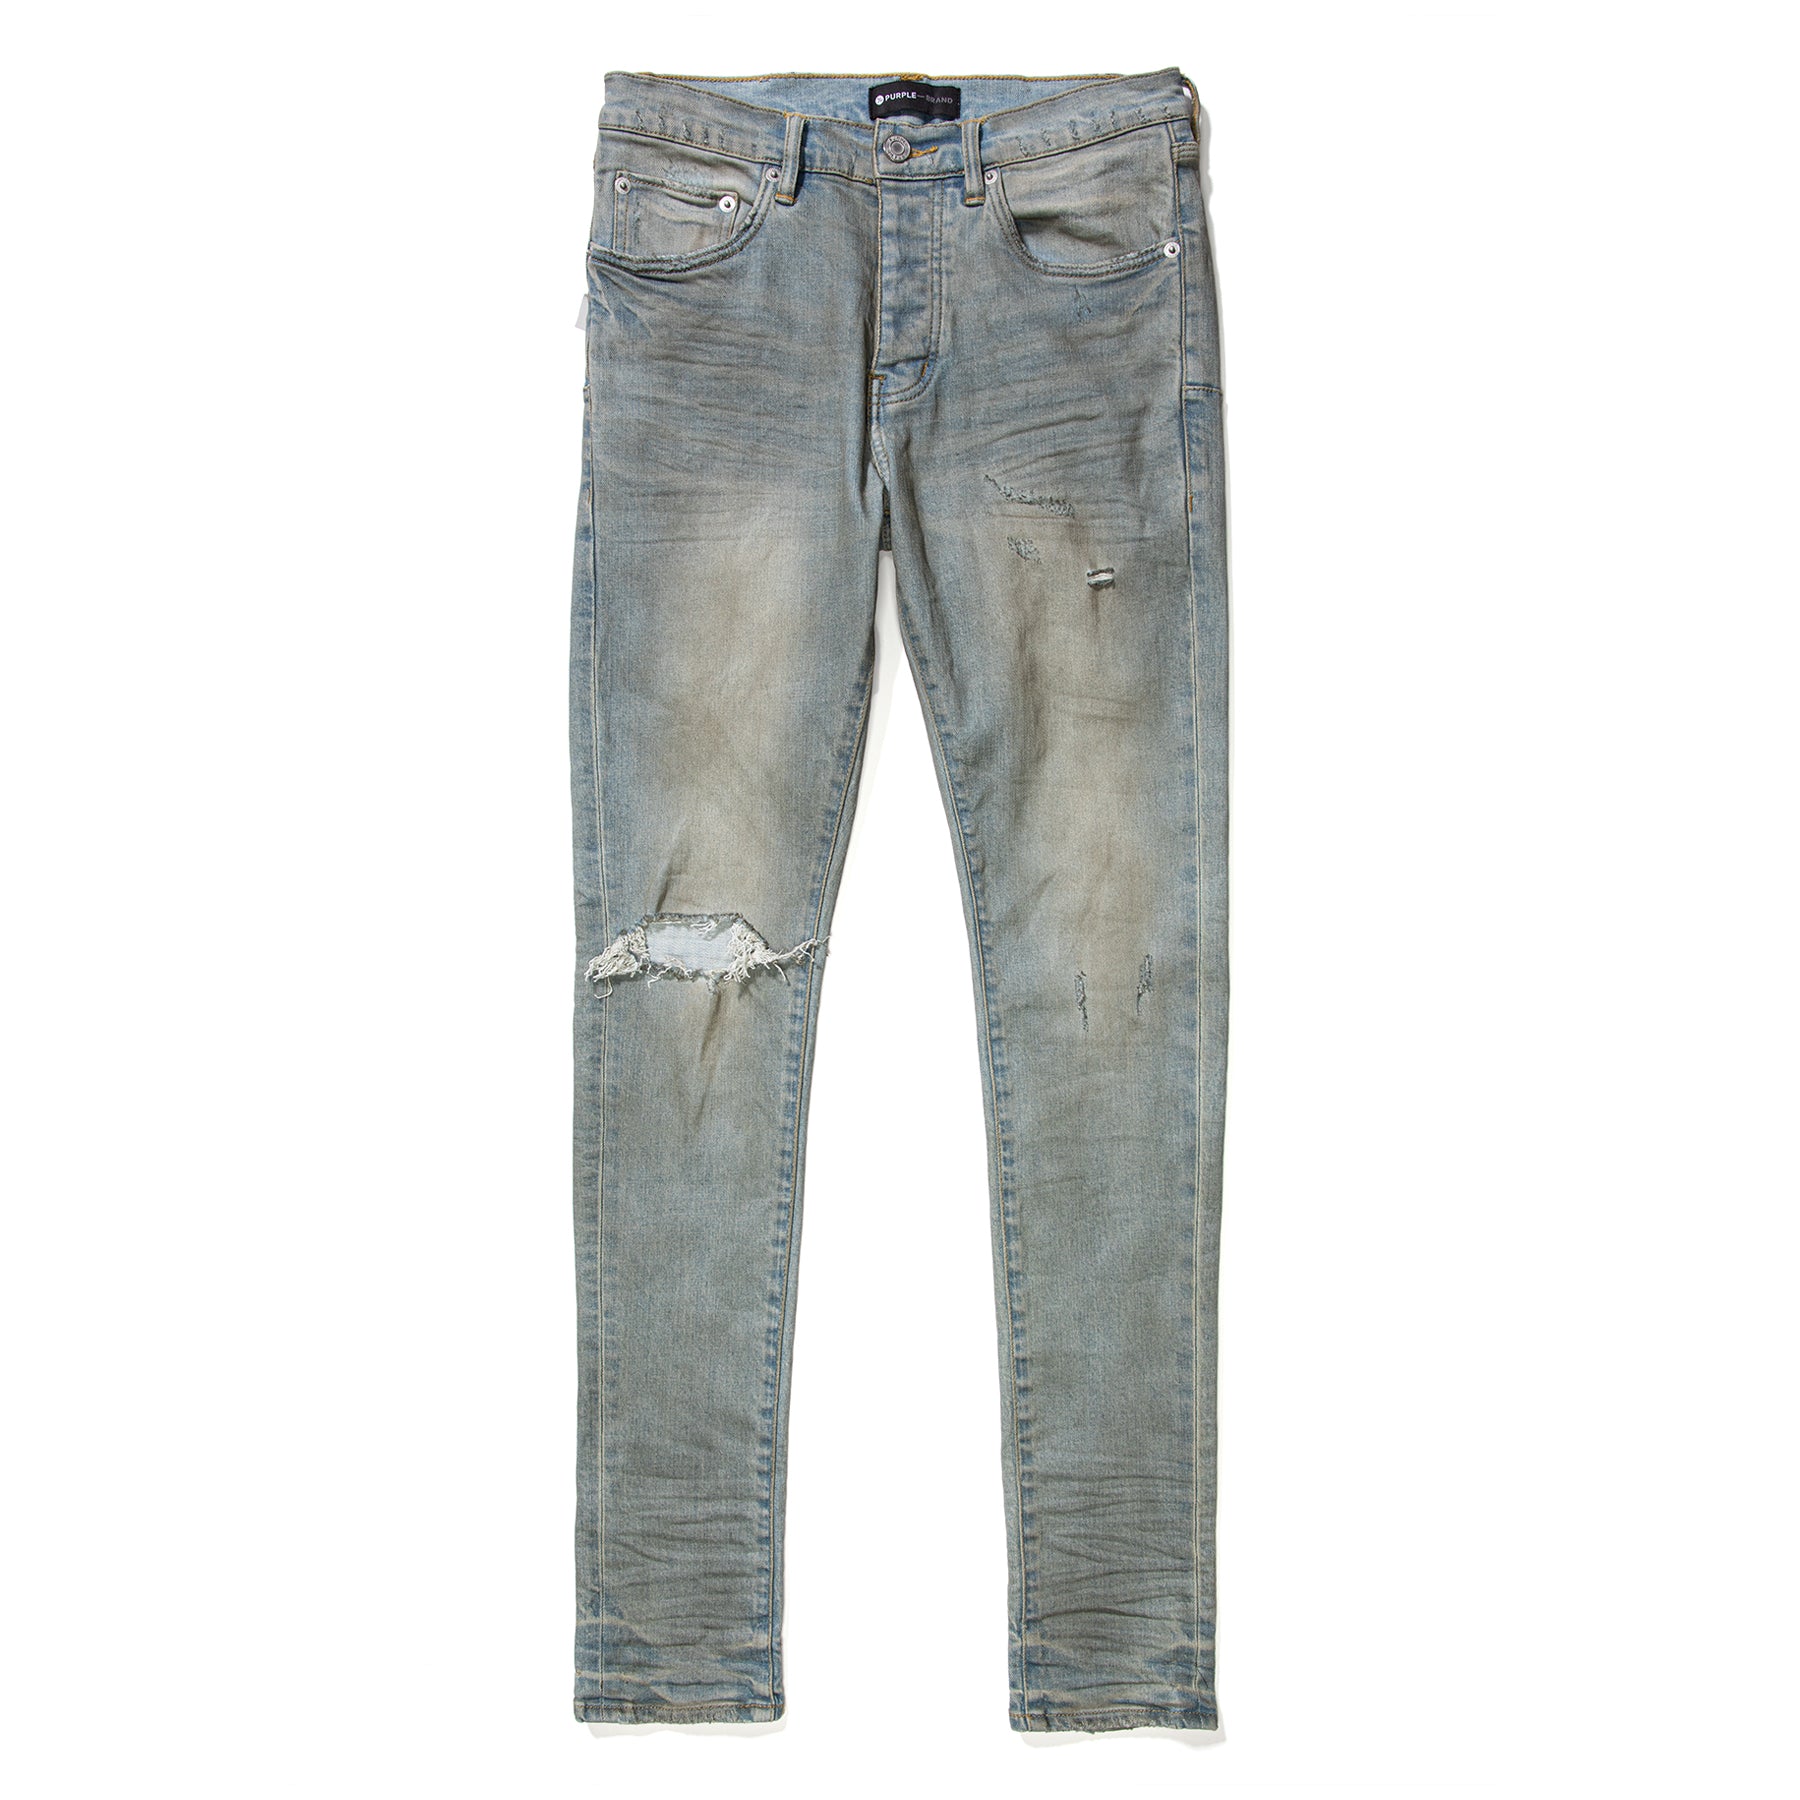 Purple Brand Jeans Men Slim Straight Mid Rise Blue P005 $295 Size 30/30